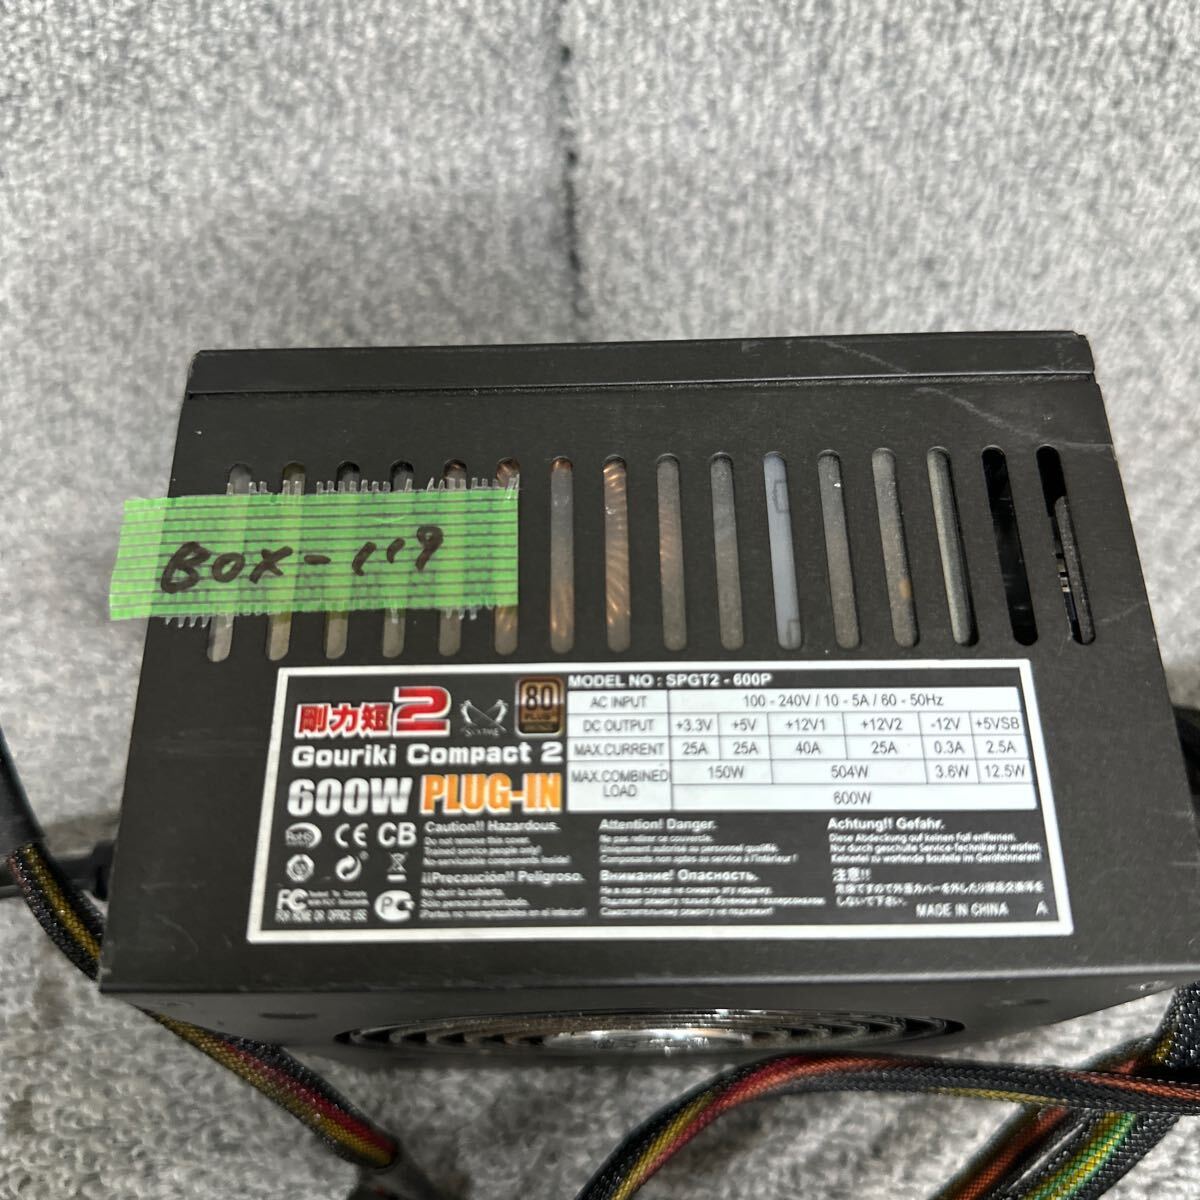 GK супер-скидка BOX-119 PC источник питания BOX SCYTHE Gou сила короткий 2 Gouriki Compact 2 600W PLUG-IN SPGT2-600P 80PLUS BRONZE источник питания напряжение подтверждено б/у товар 